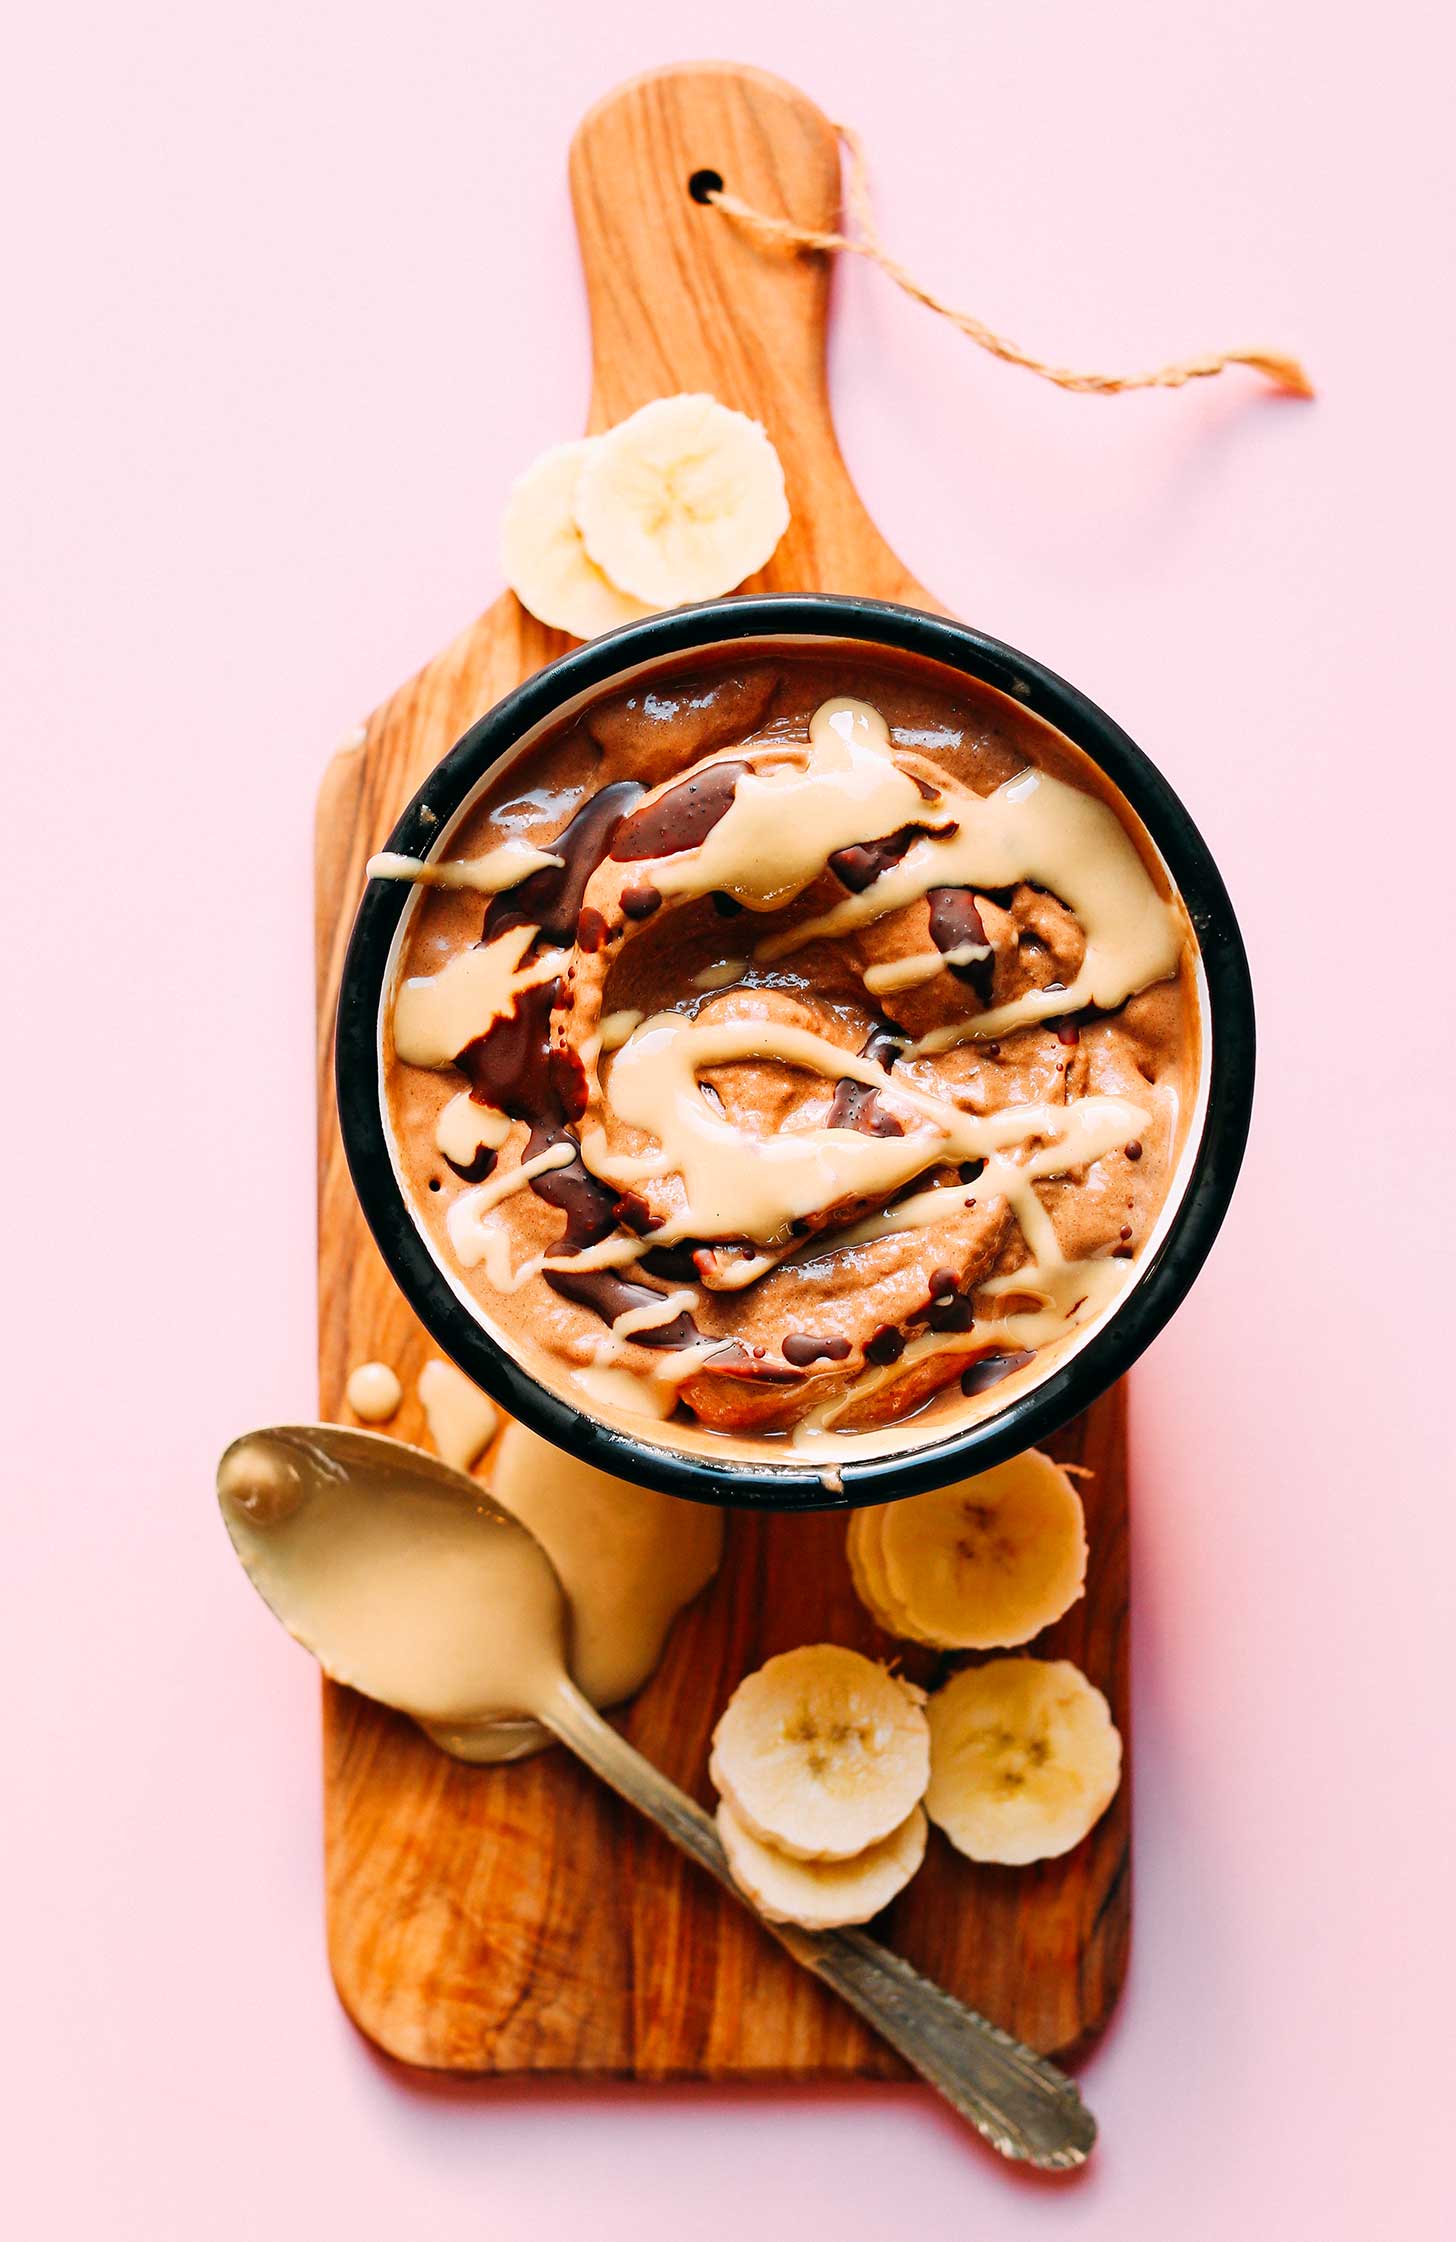 Wood cutting board with a bowl of vegan Chocolate Tahini Banana Soft Serve